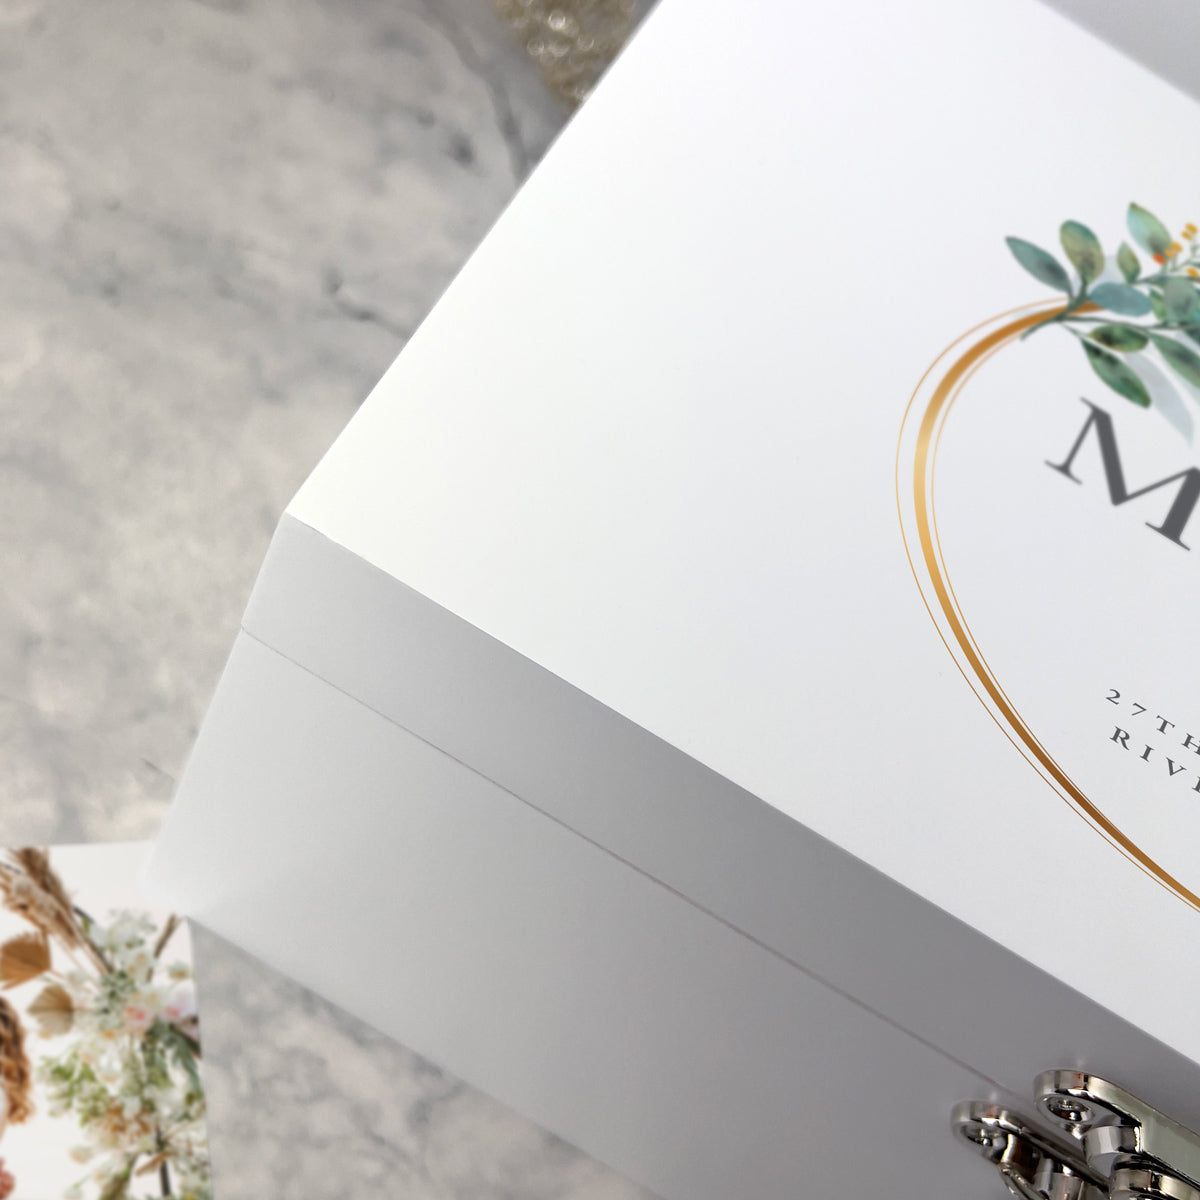 Personalised Luxury White Wooden Wreath Wedding Keepsake Memory Box - 3 Sizes (22cm | 27cm | 30cm)